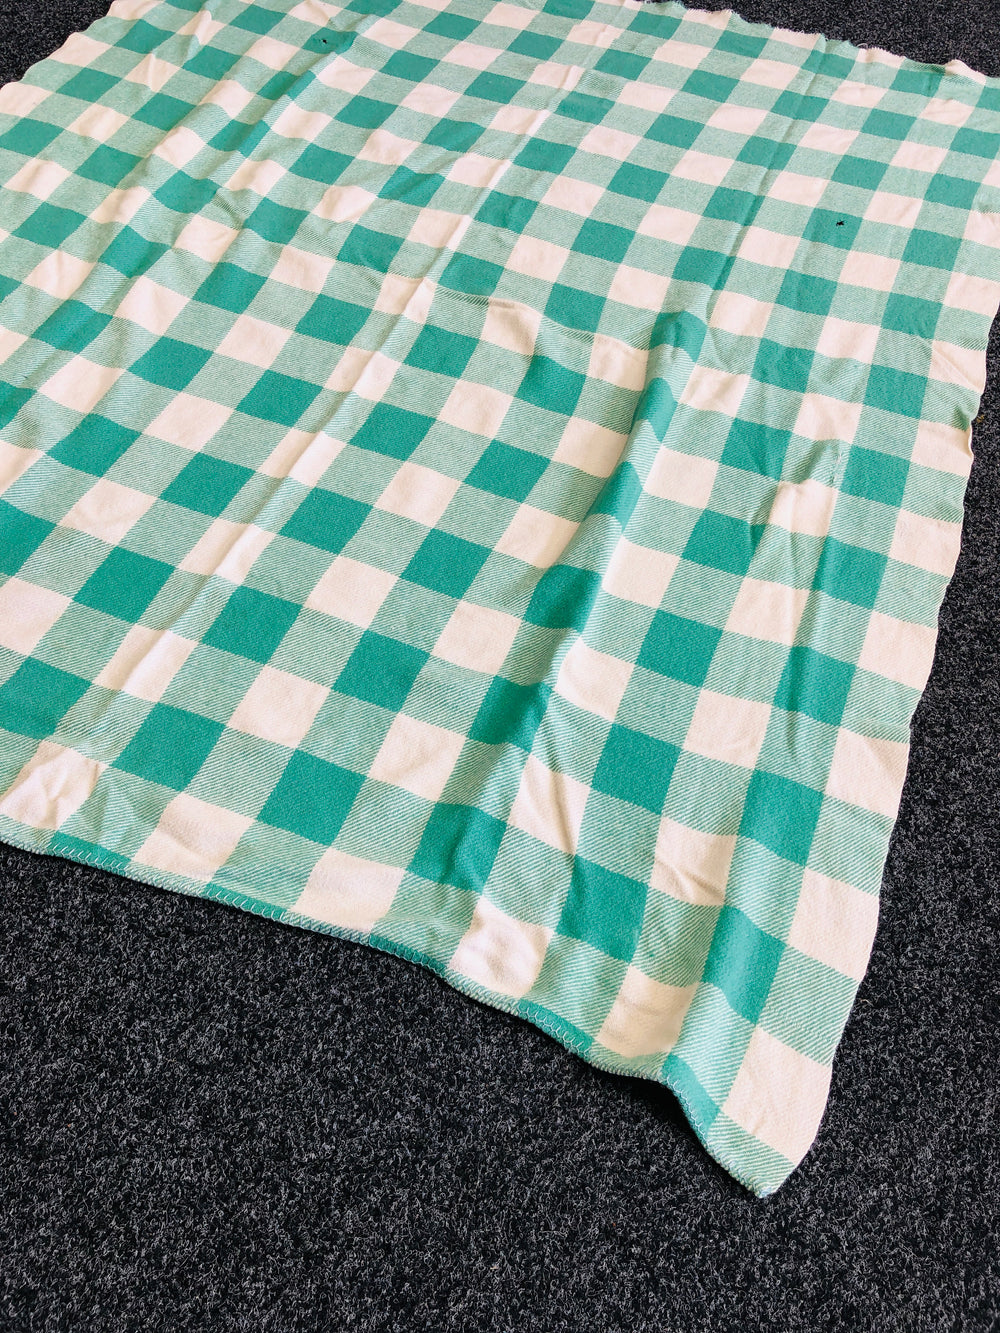 Green/Cream Petone Wool Blanket Craft or Pet (17296)